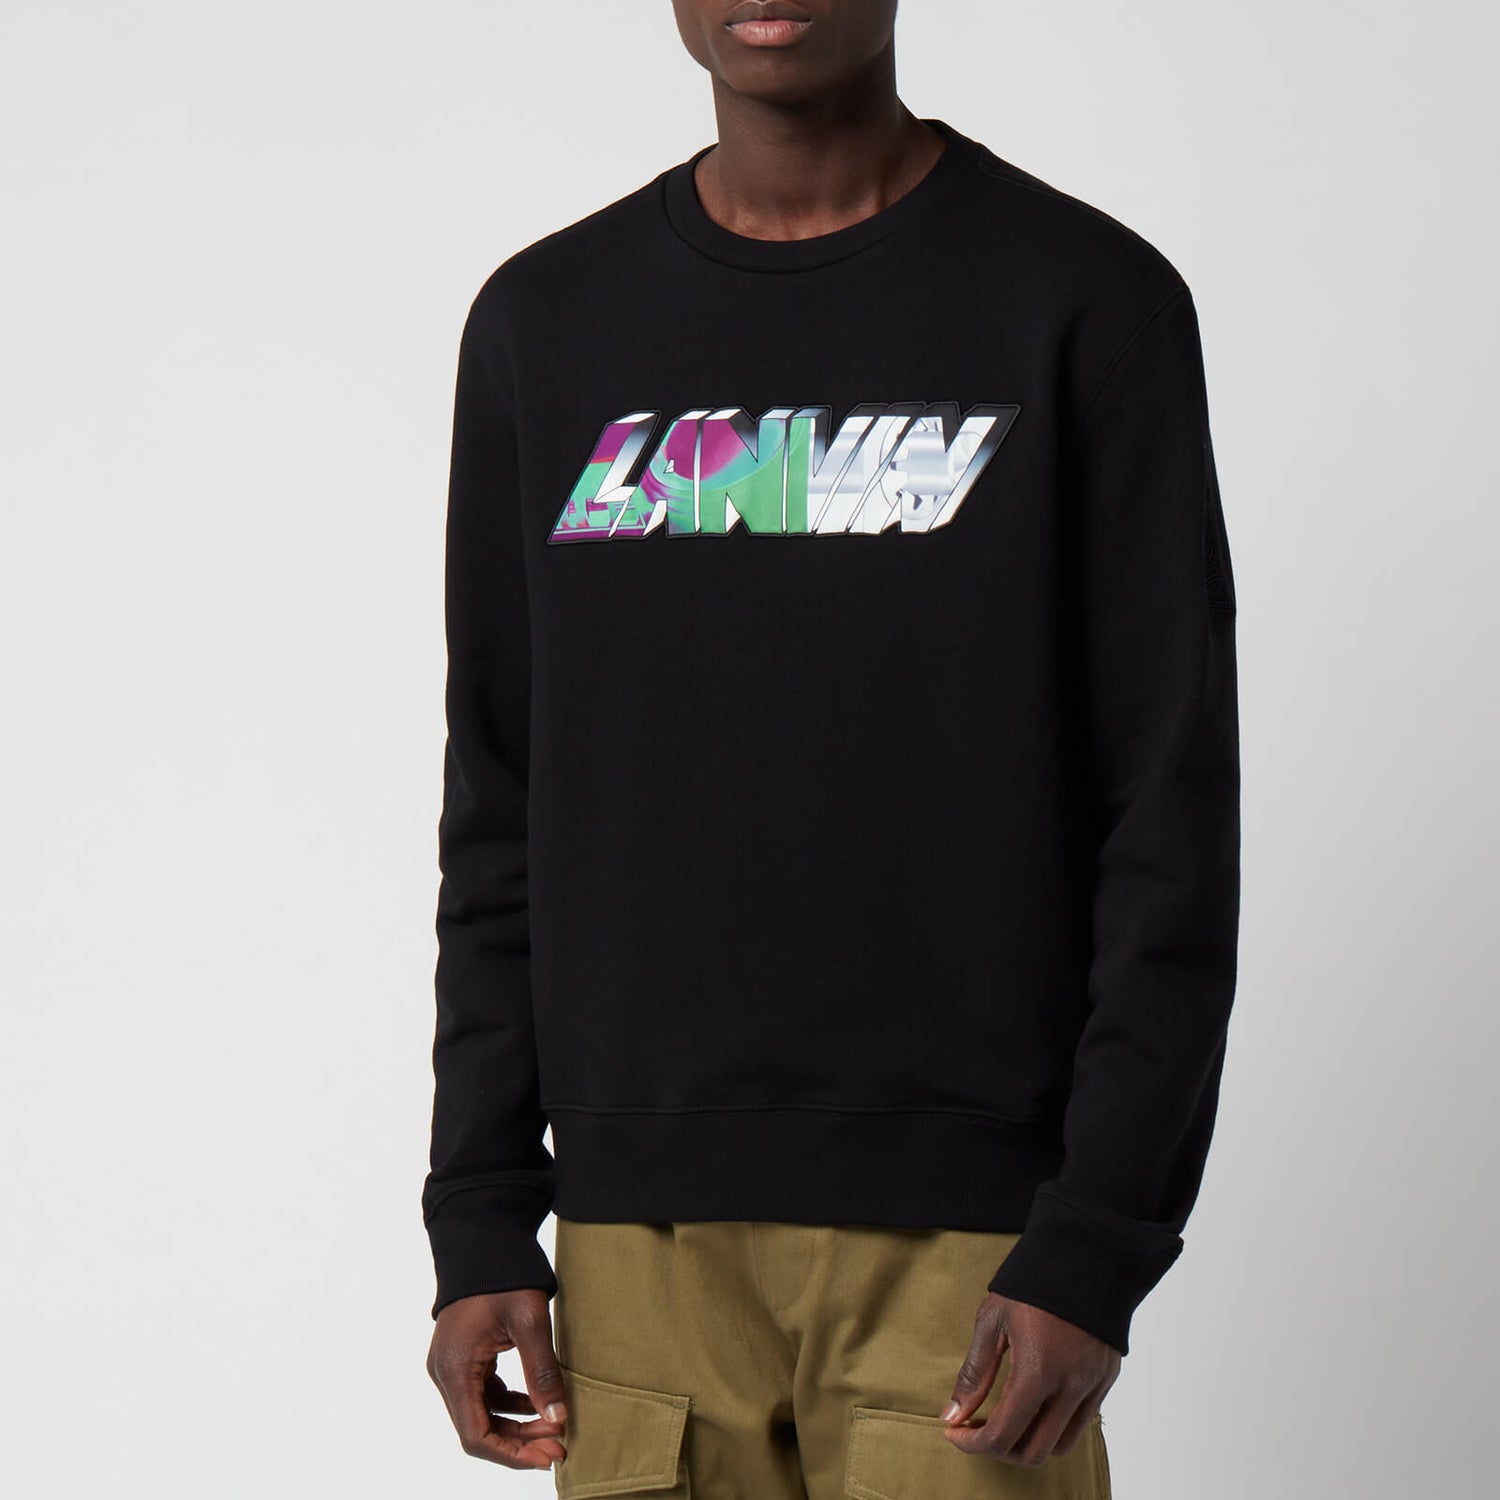 Lanvin Men's Rosenquist Sweatshirt - Black - M